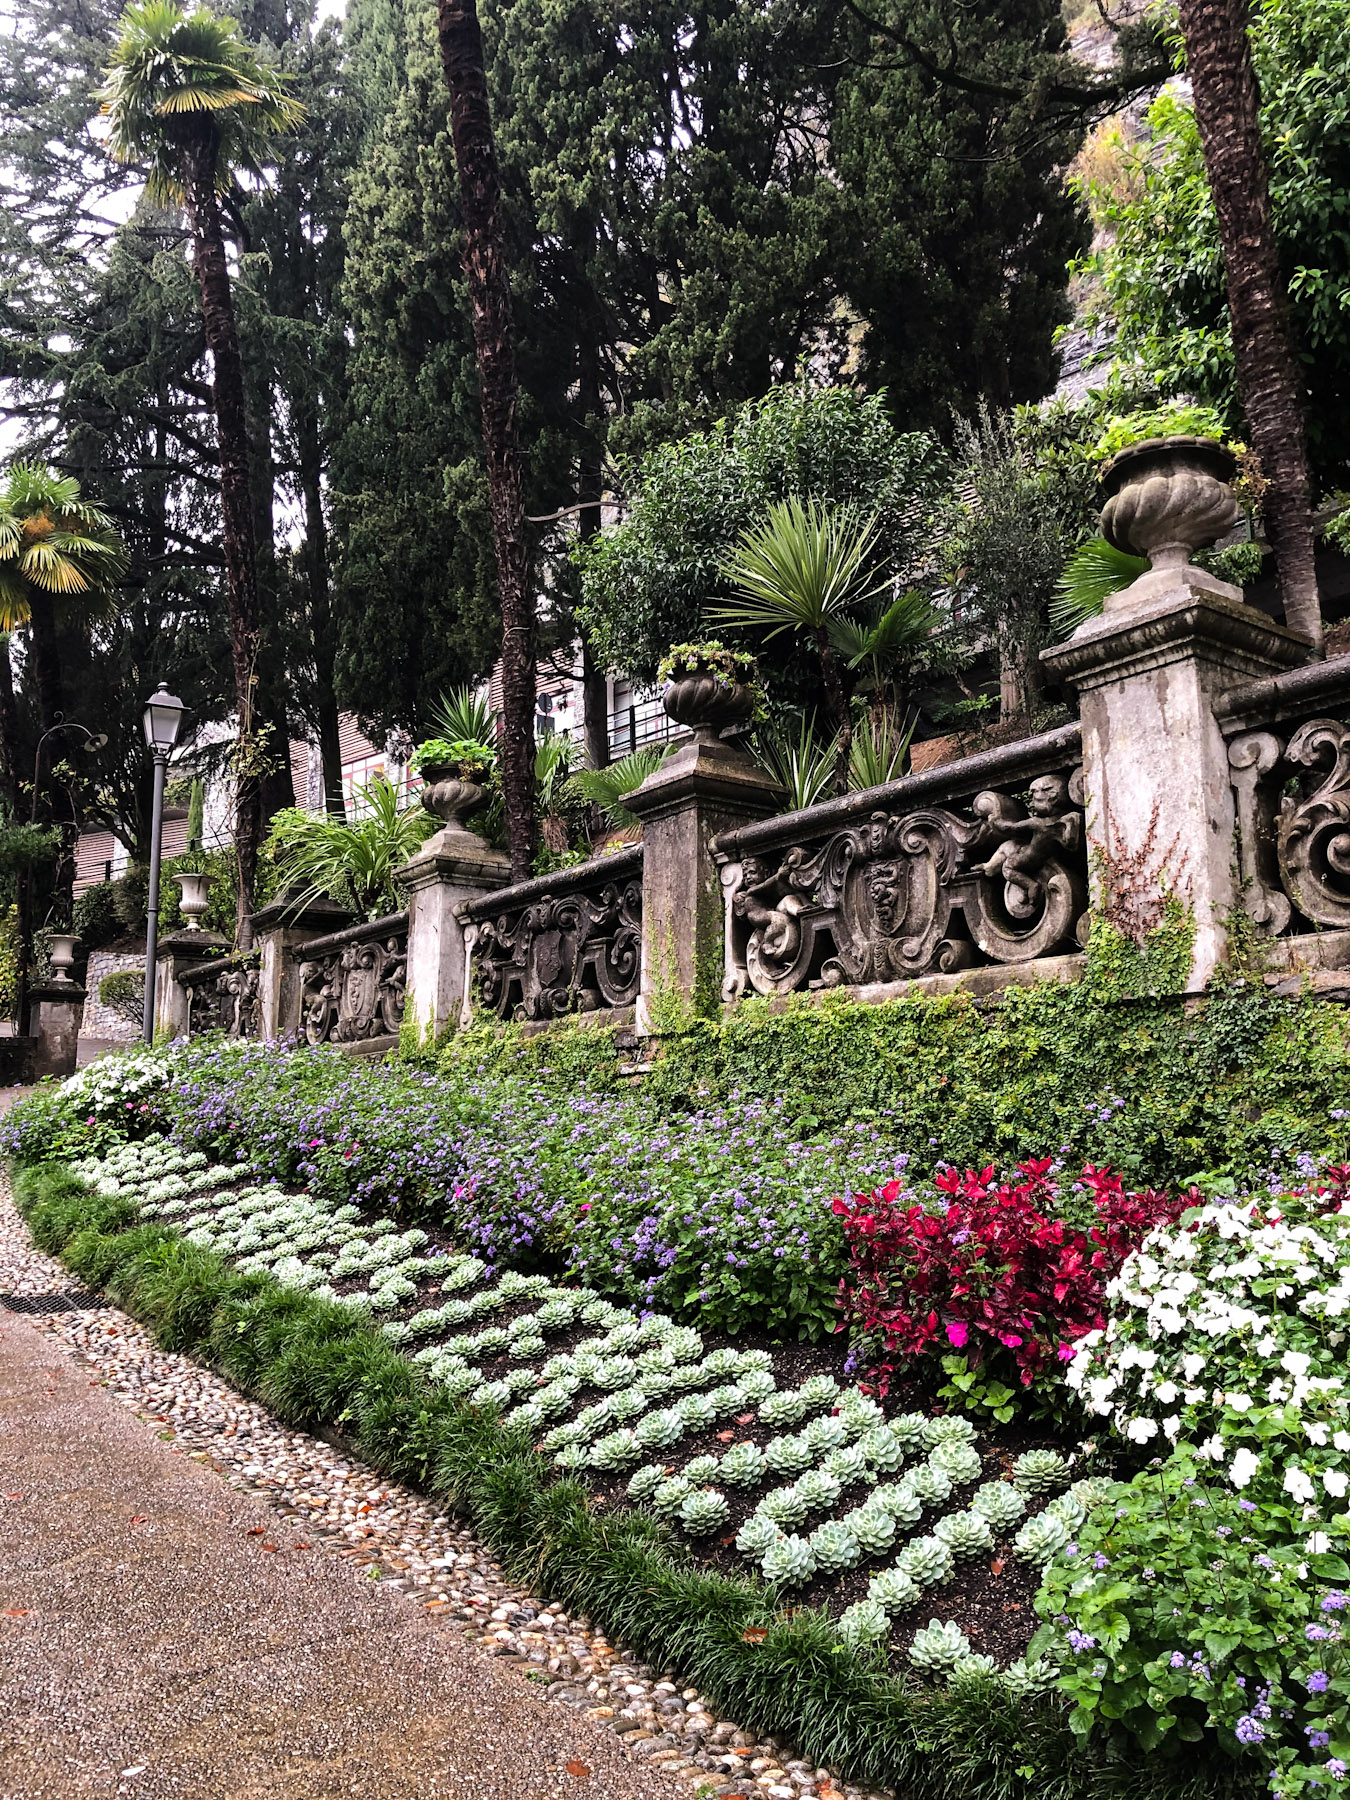 Villa Monastero Botanical Gardens, Varenna, Italy